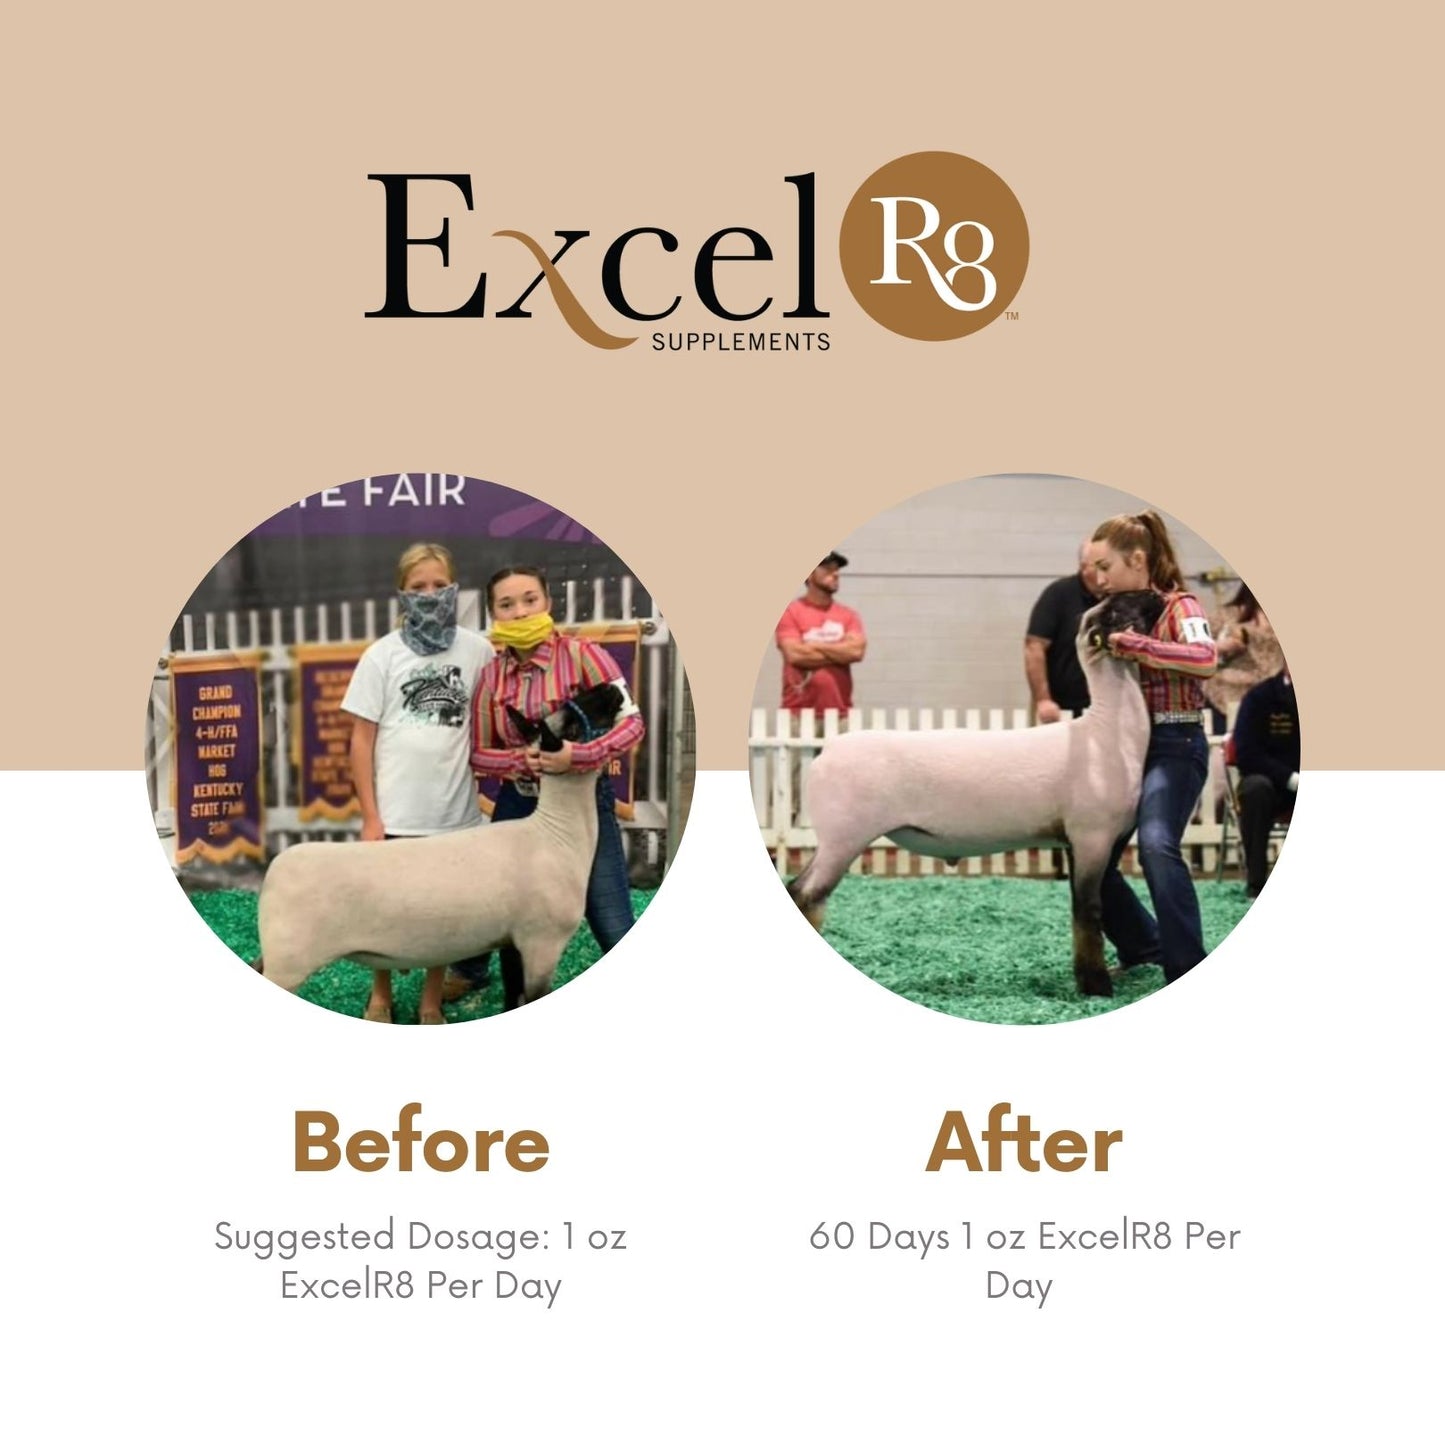 ExcelR8 Livestock Supplement